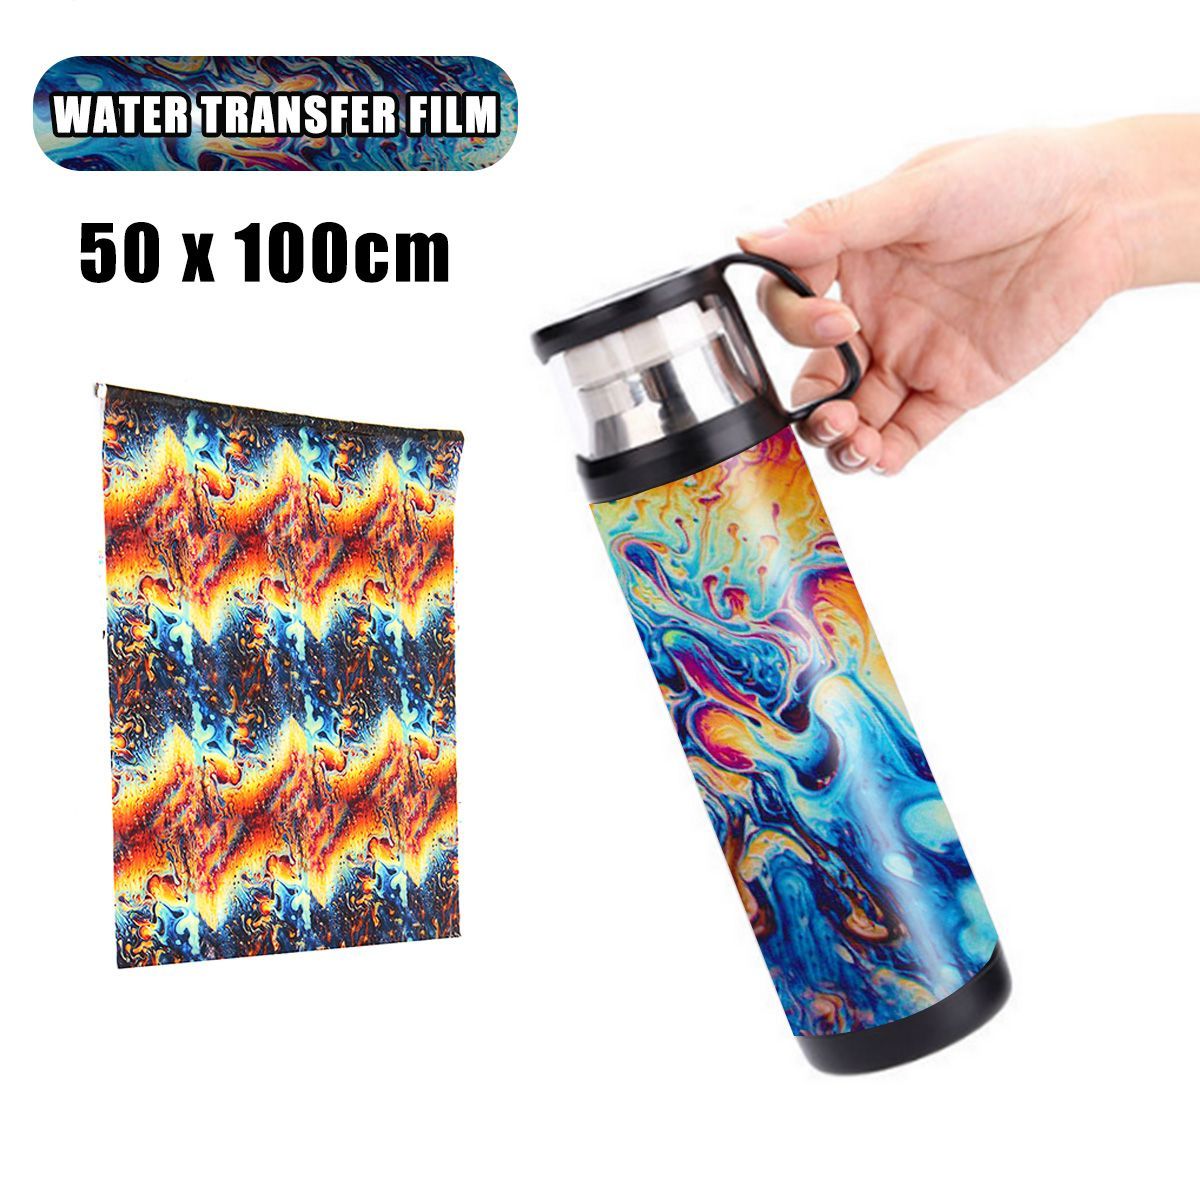 50x100cm-PVA-Dipping-Hydrographics-Film-Water-Transfer-Film-Printing-Oil-Slick-Decorations-1544879